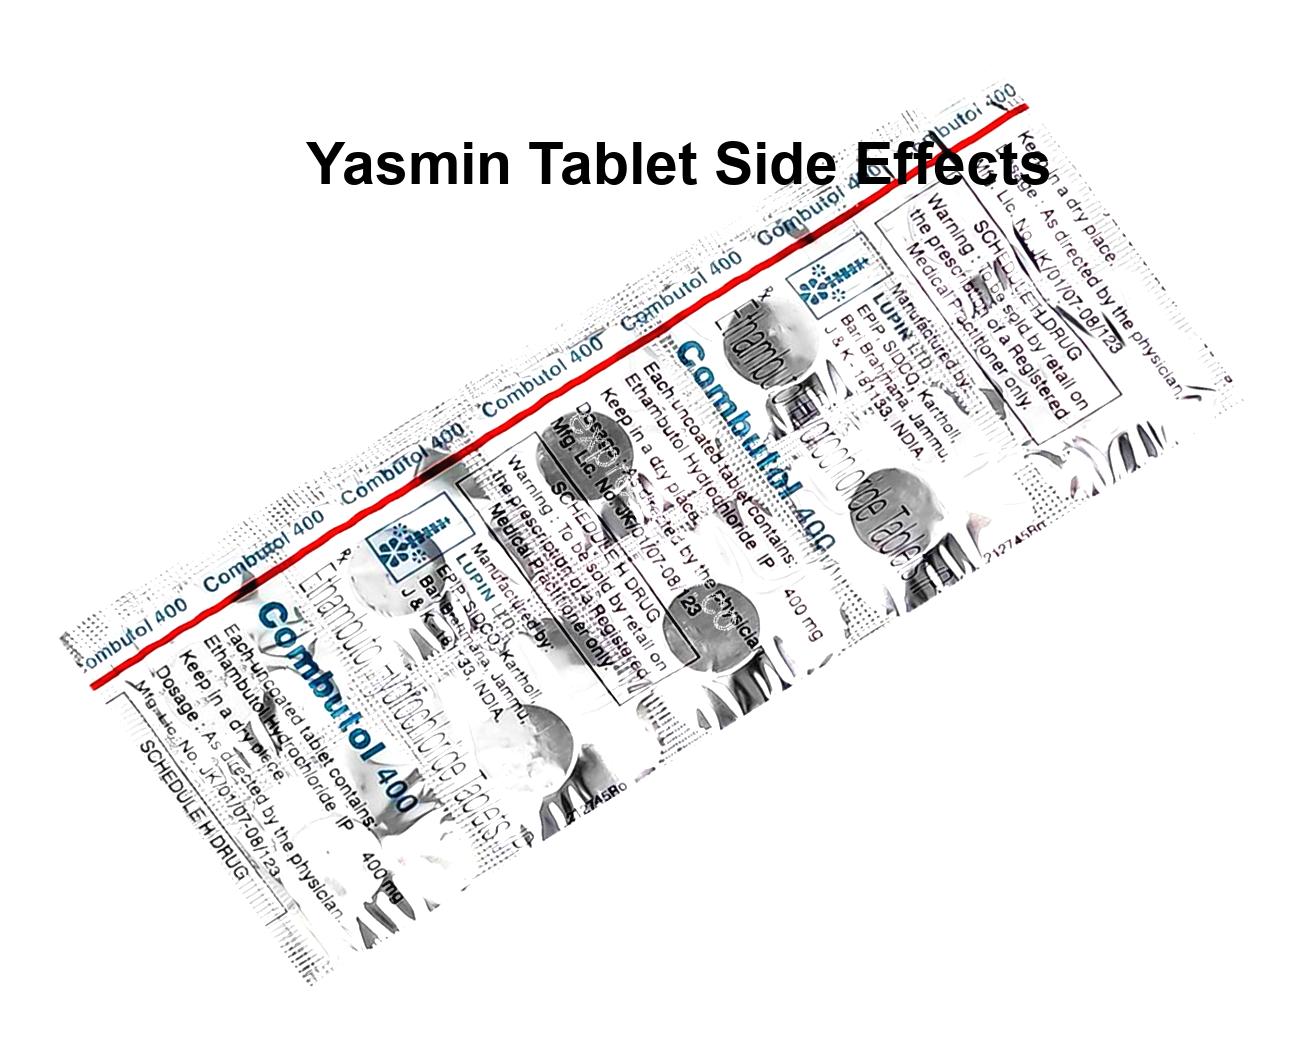 Yasmin 3.0299999713897705 mg 21 pills